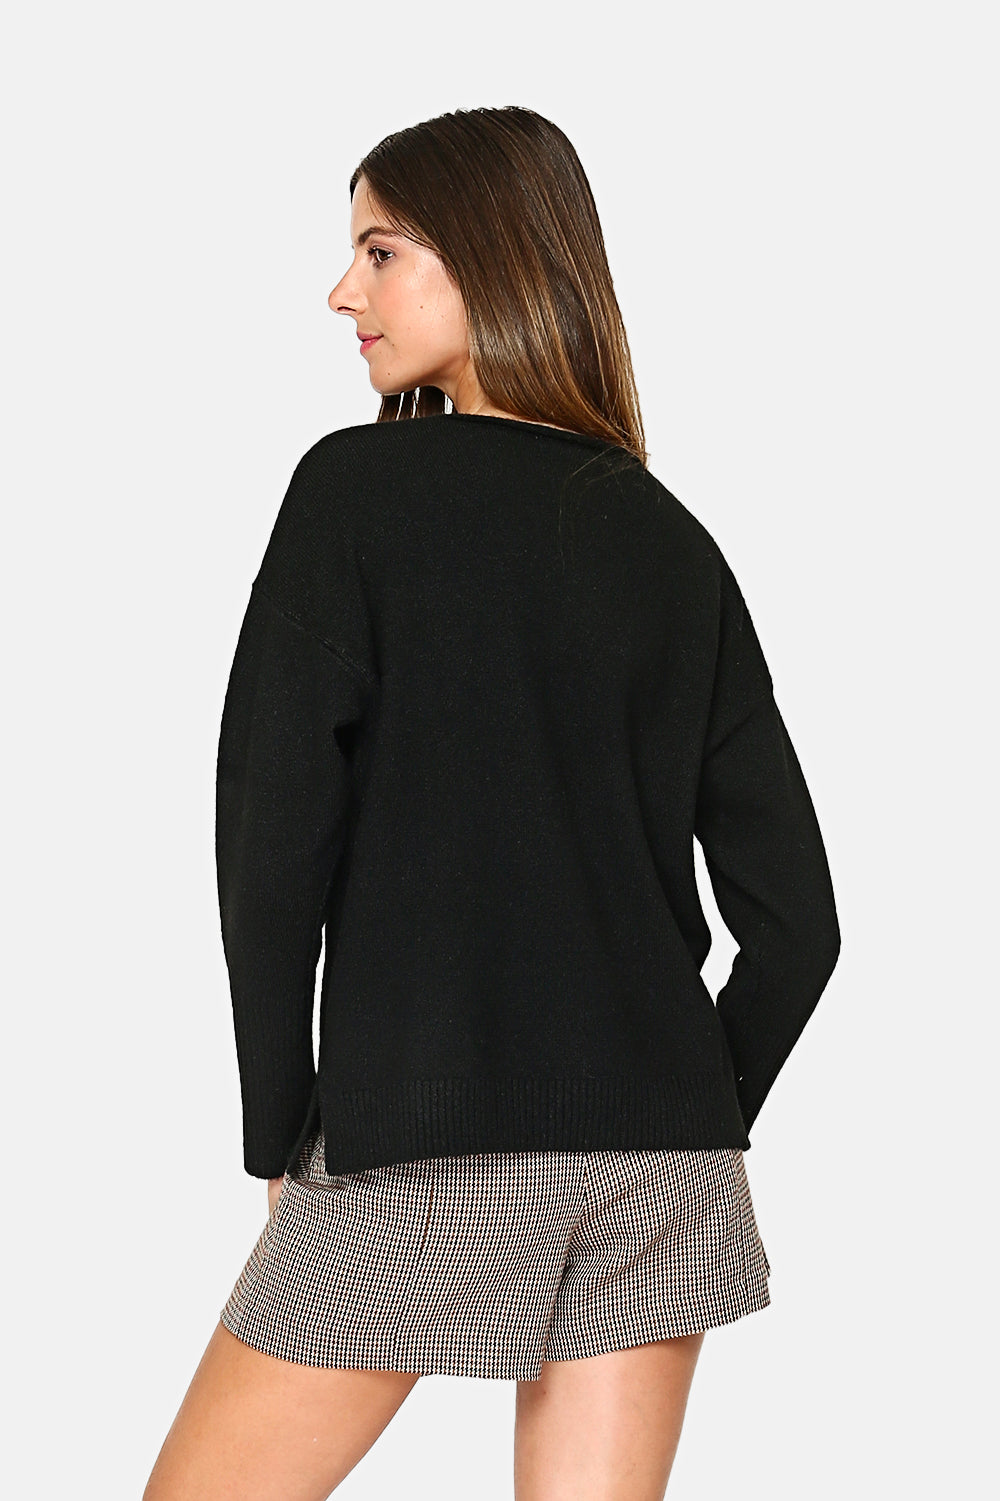 Wide turtleneck sweater, 2 sides openwork front